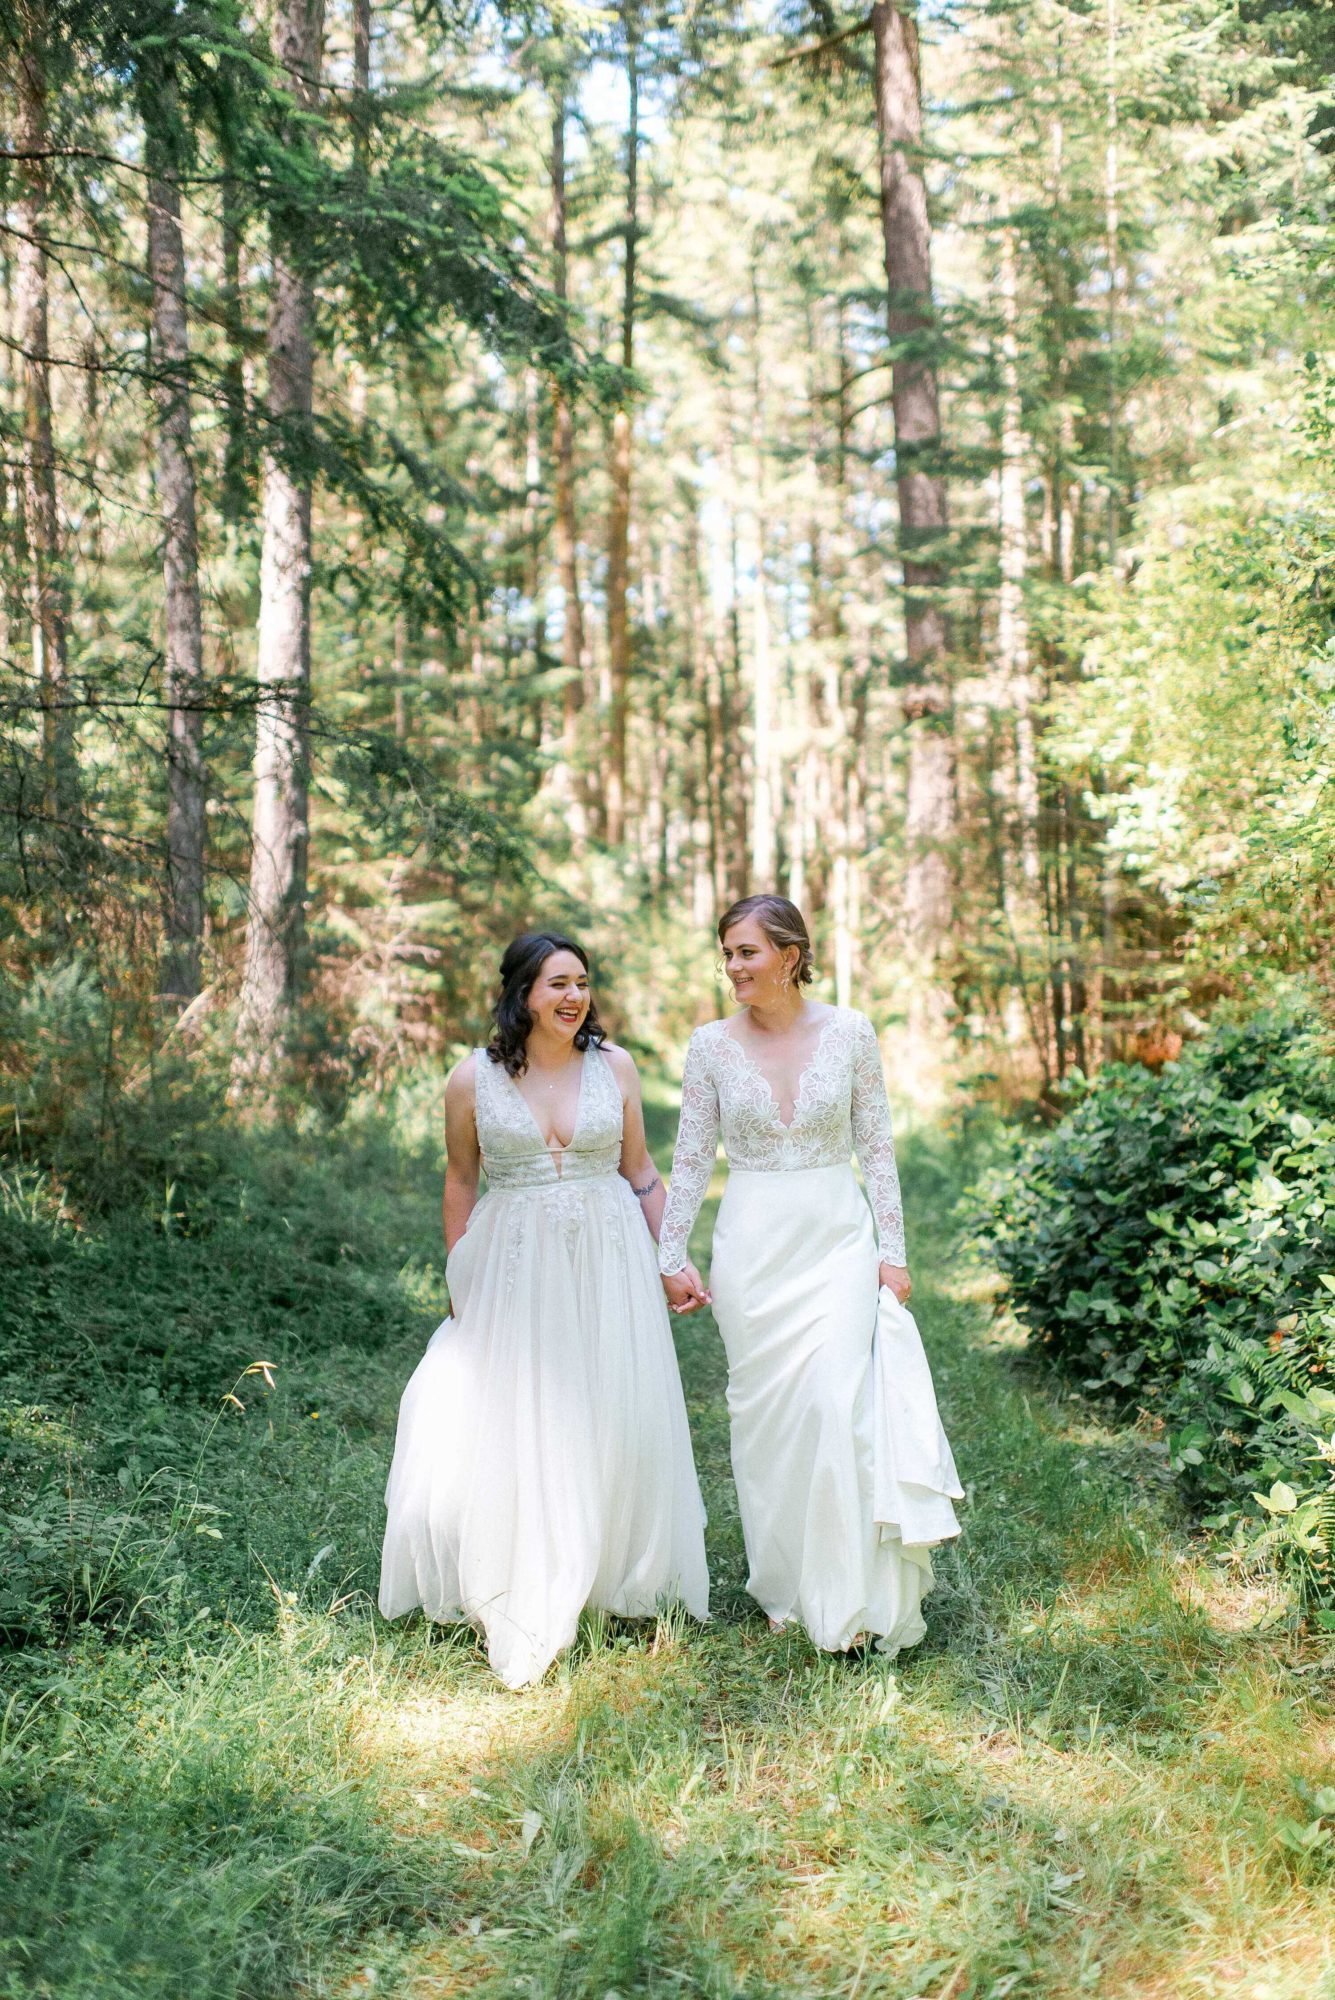 Two Brides LGTBQ+ Lesbian wedding in a forest near seattle